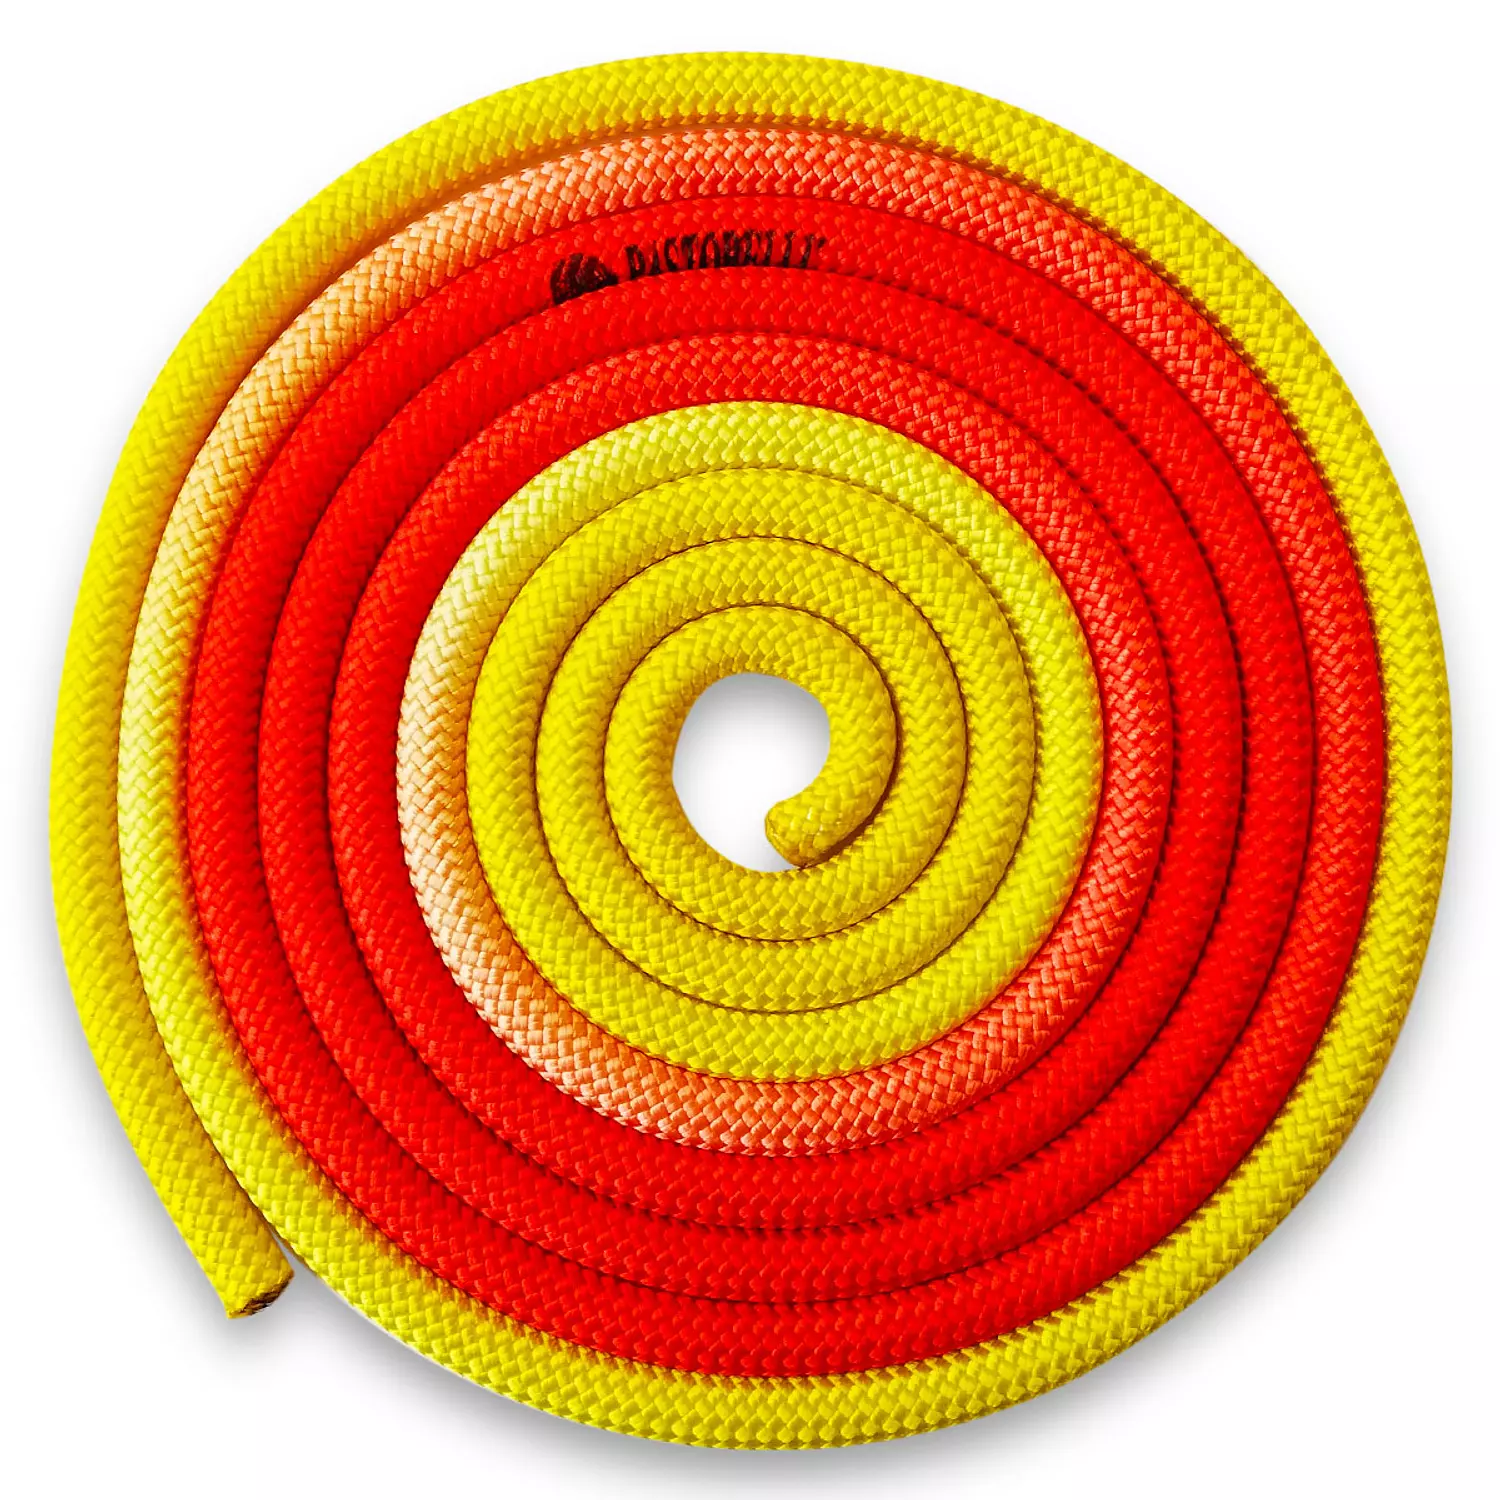 Pastorelli-New Orleans multicolor rope FIG 3m 3